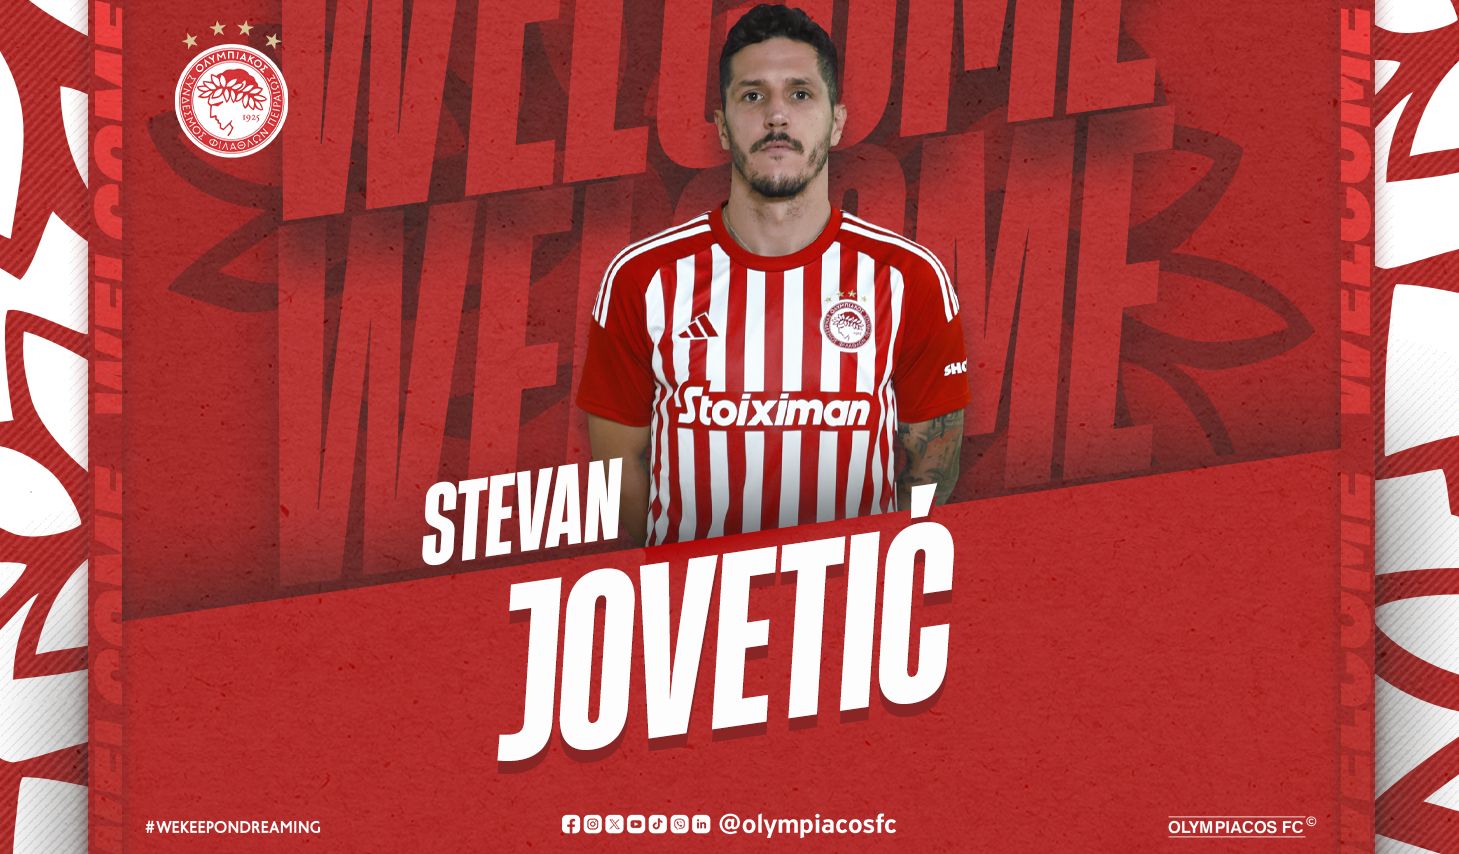 Stevan Jovetić joins Olympiacos